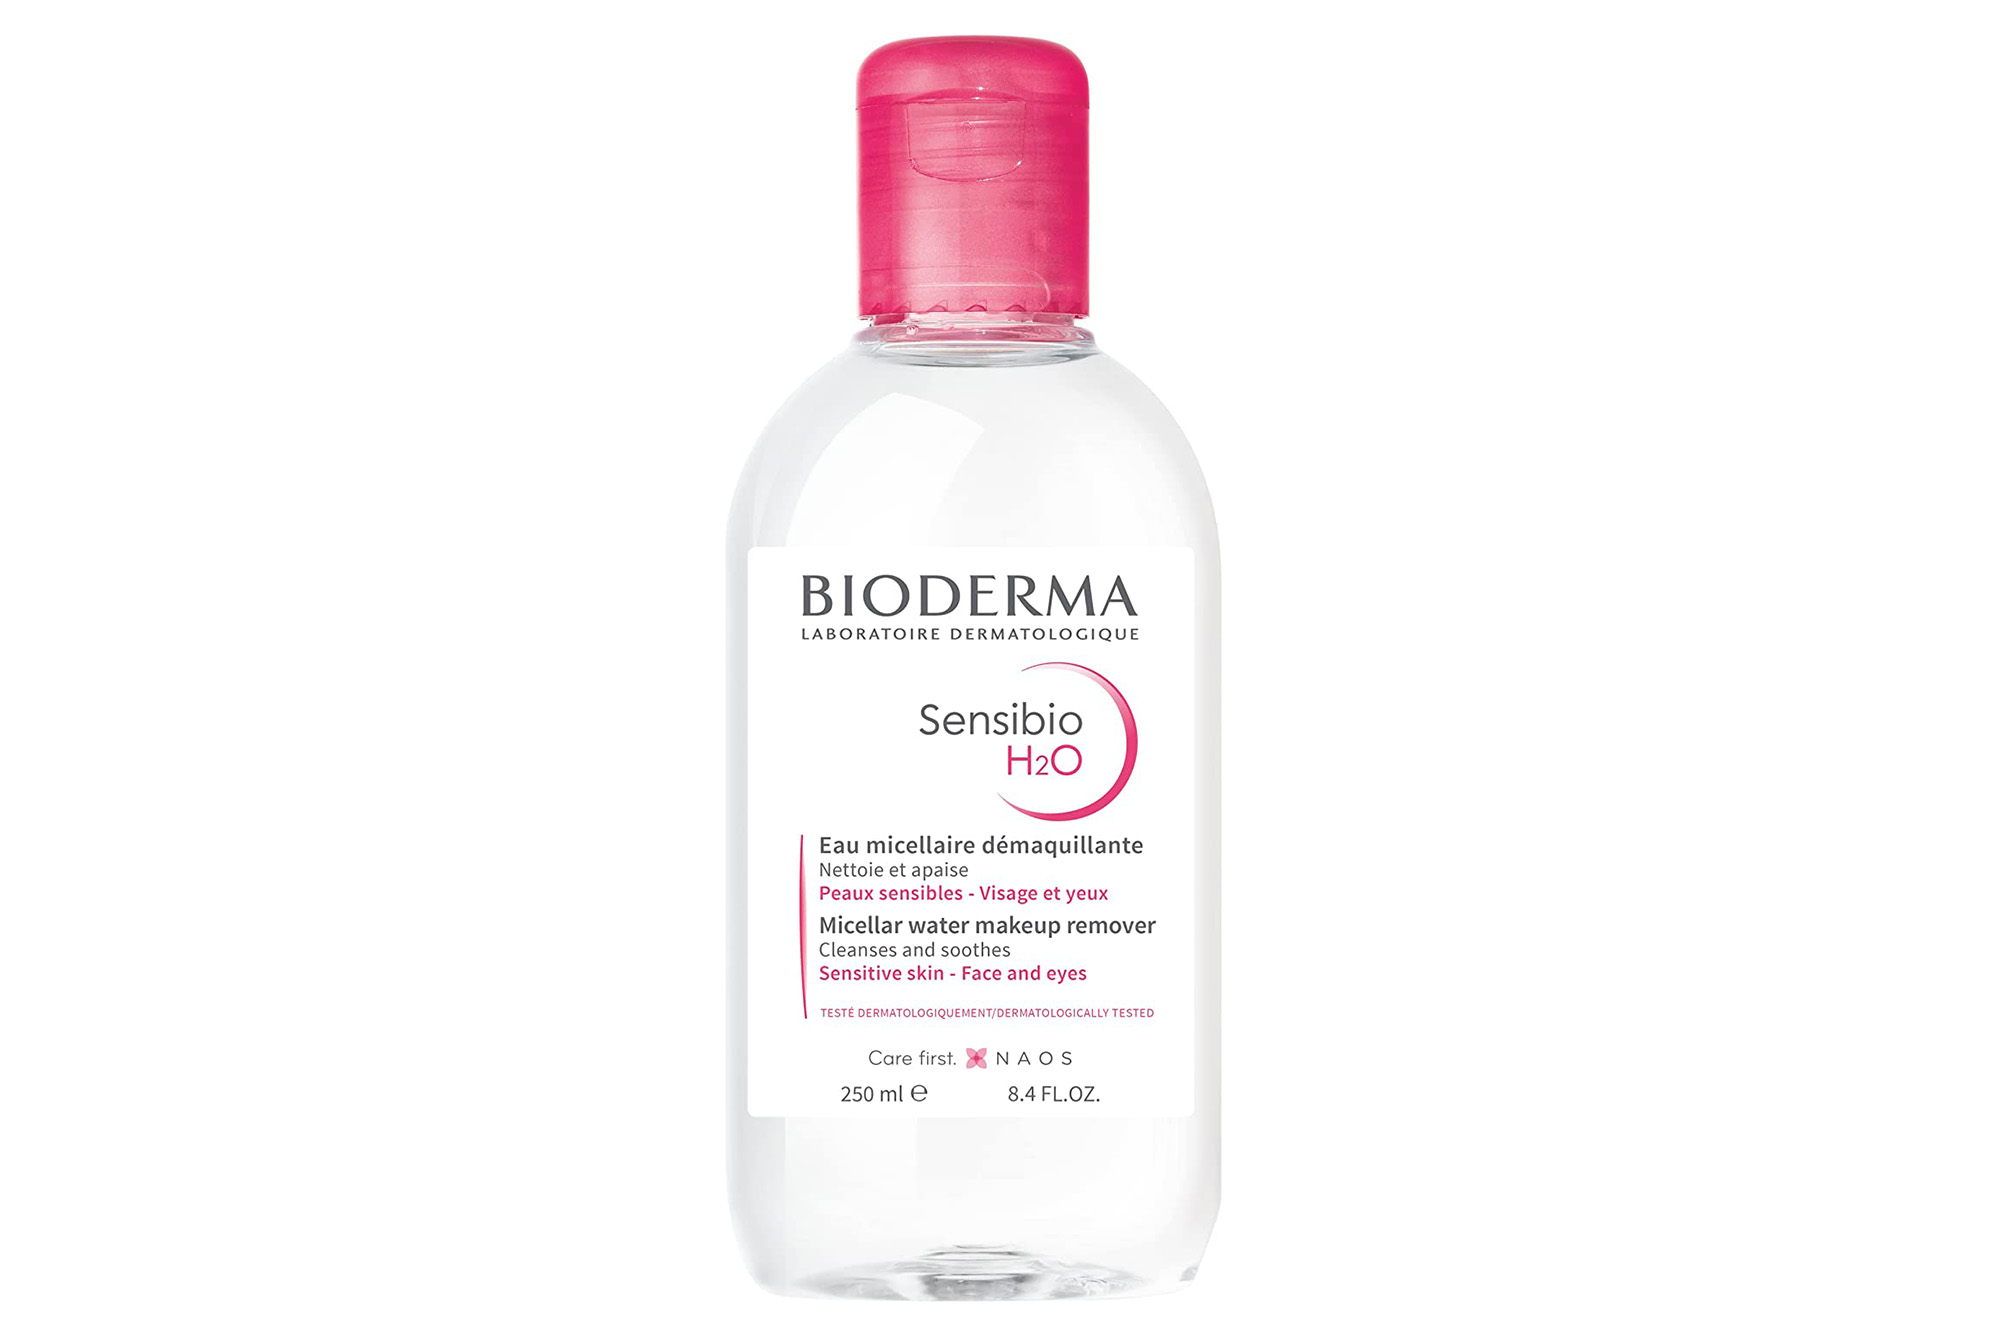 A bottle of Bioderma micellar water